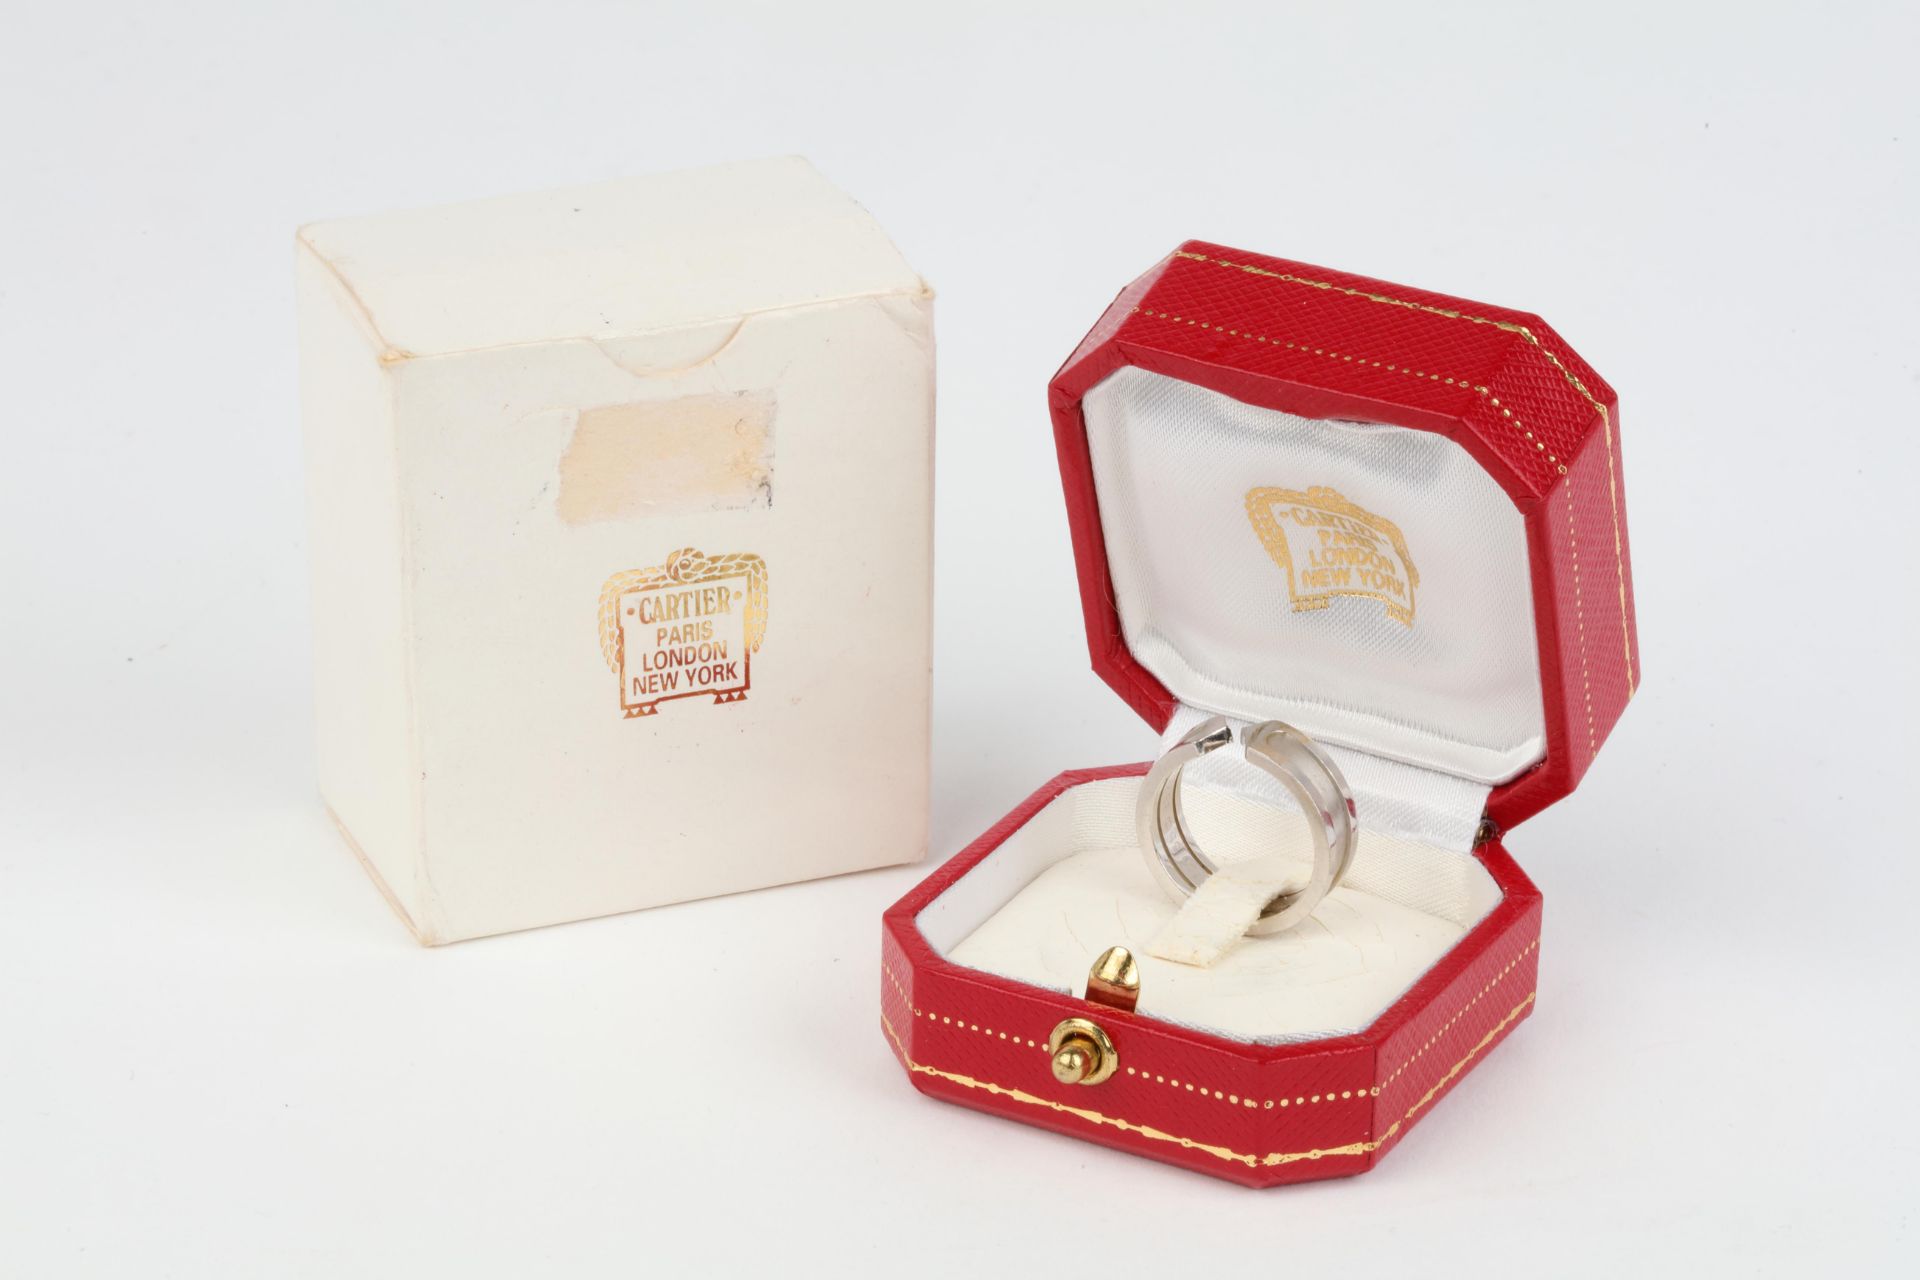 No VAT Cartier 18K White Gold C De Cartier Ring - Comes In Box - Image 4 of 4